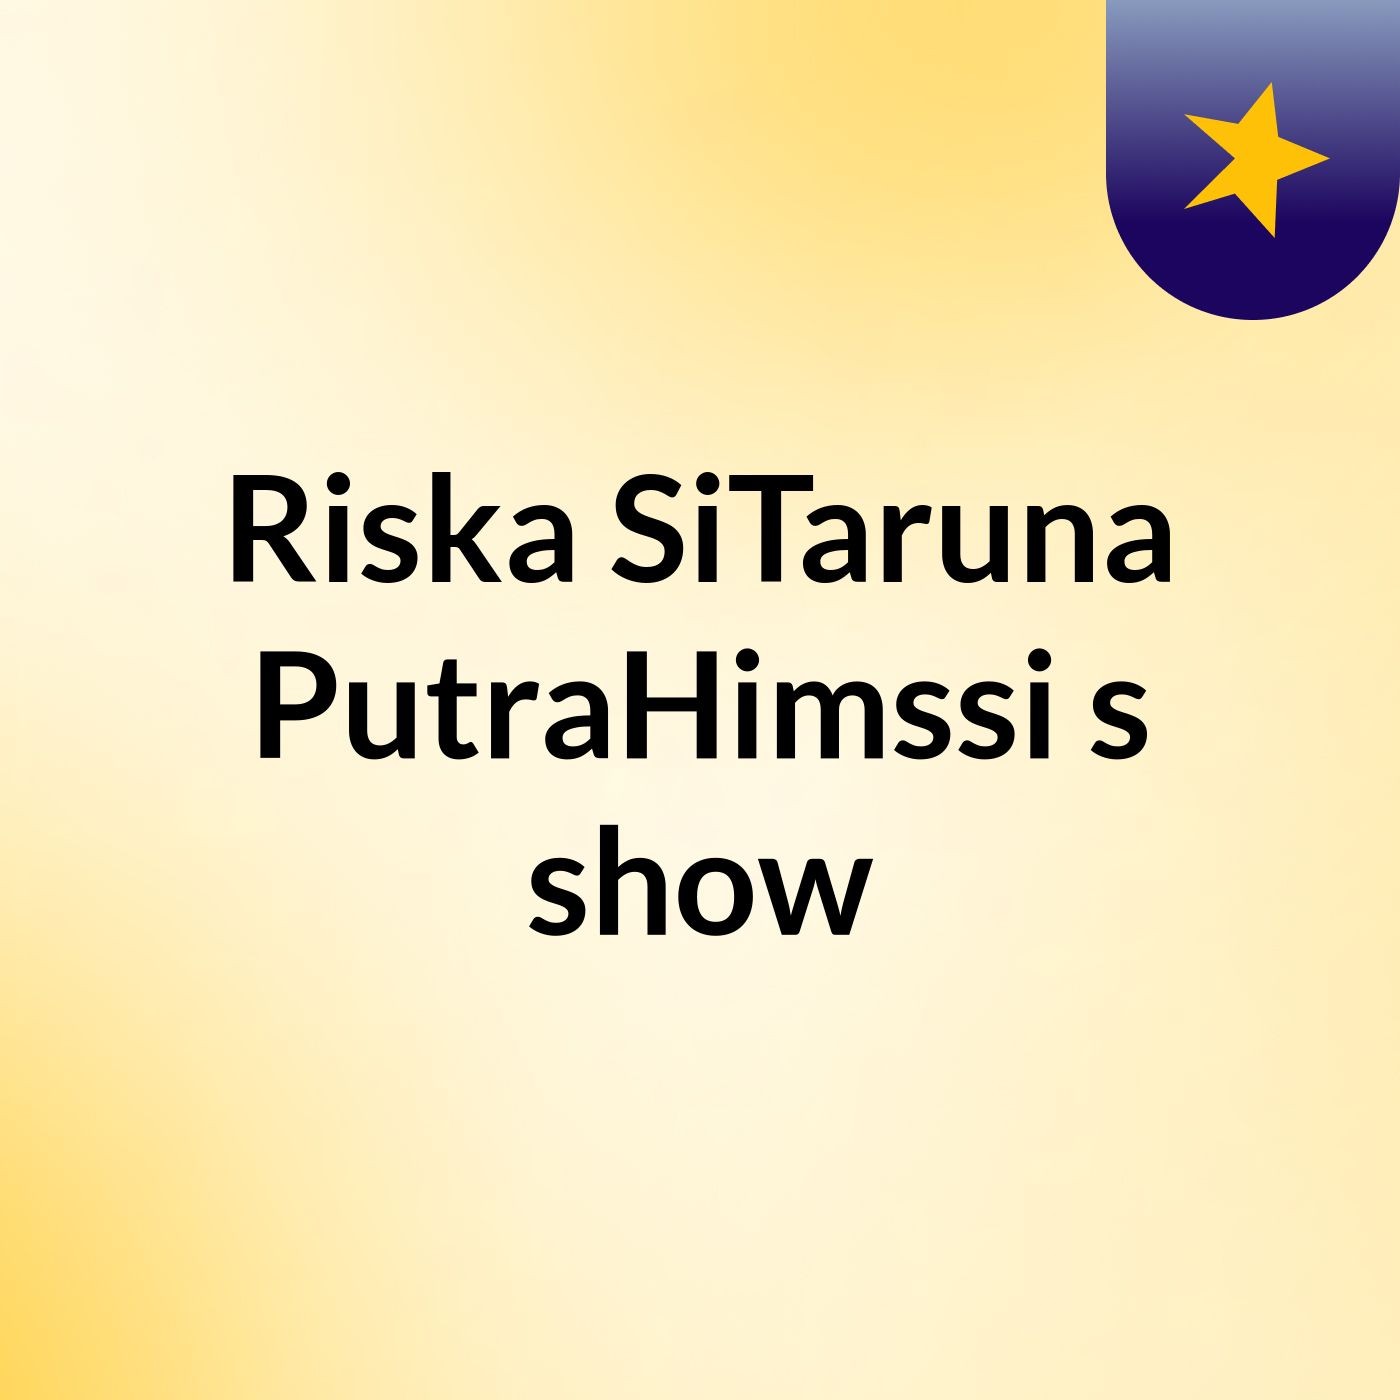 Riska SiTaruna PutraHimssi's show